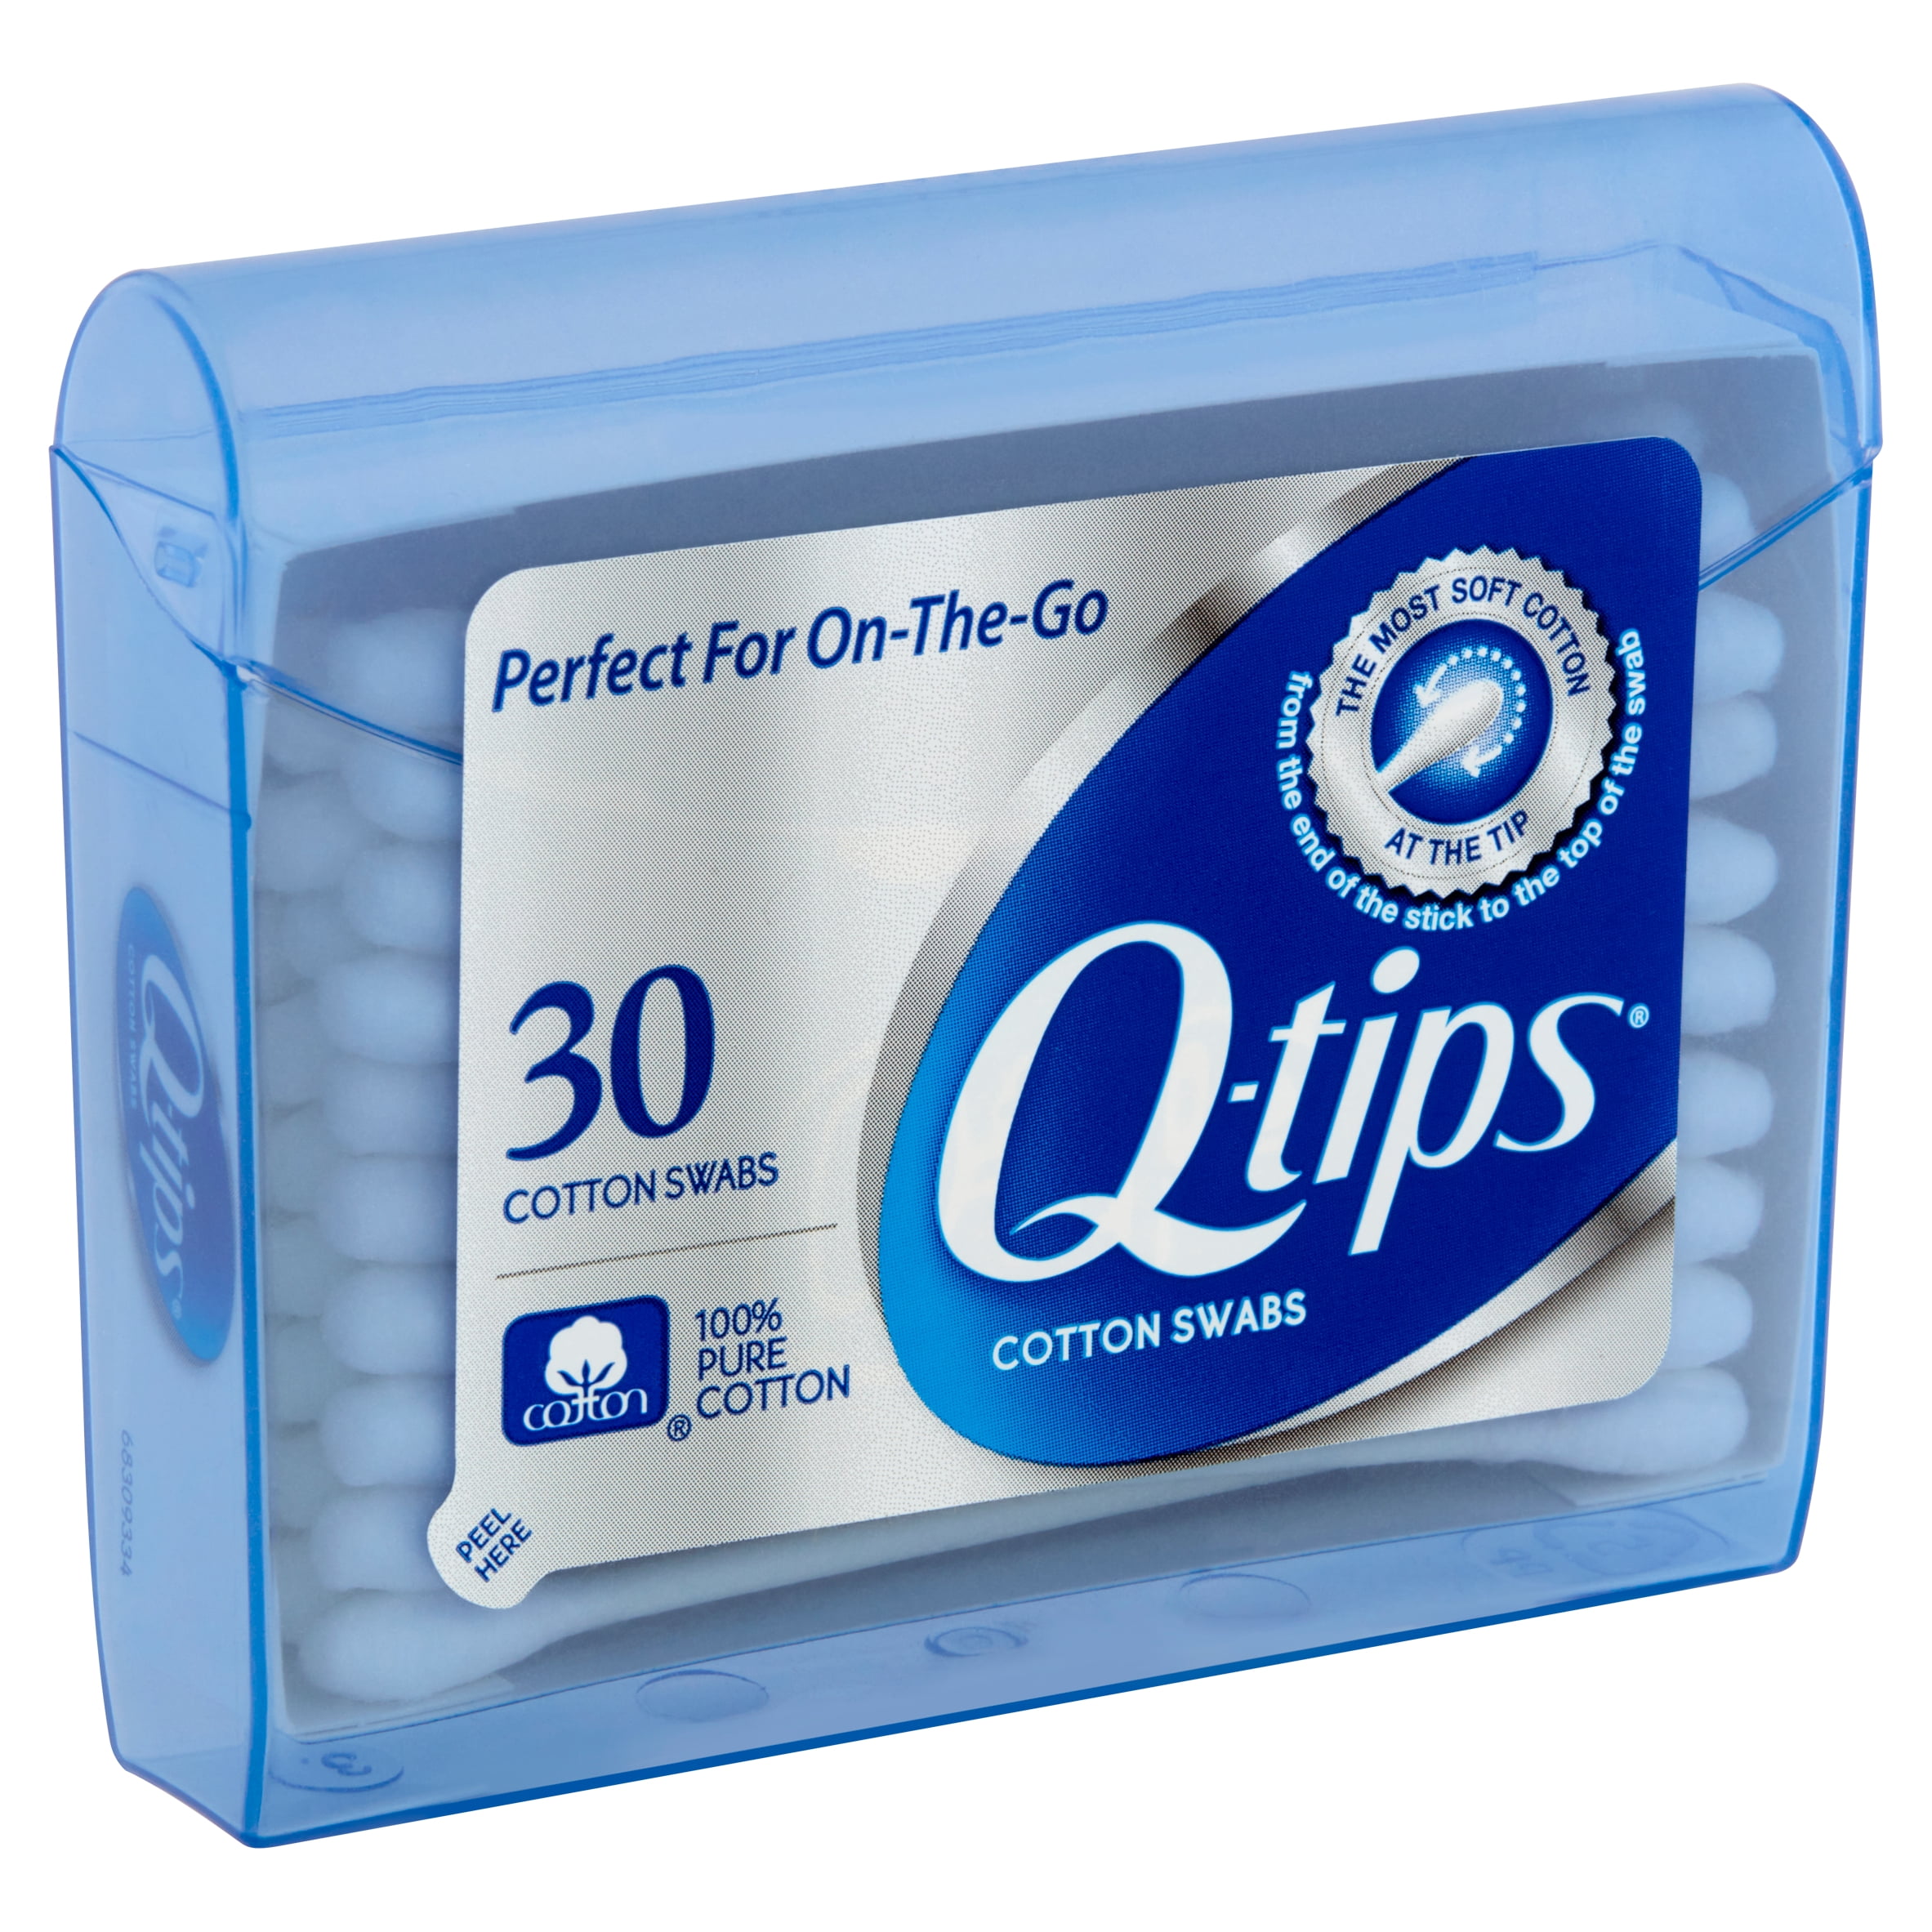 Q-tips Cotton Swabs, 30 count